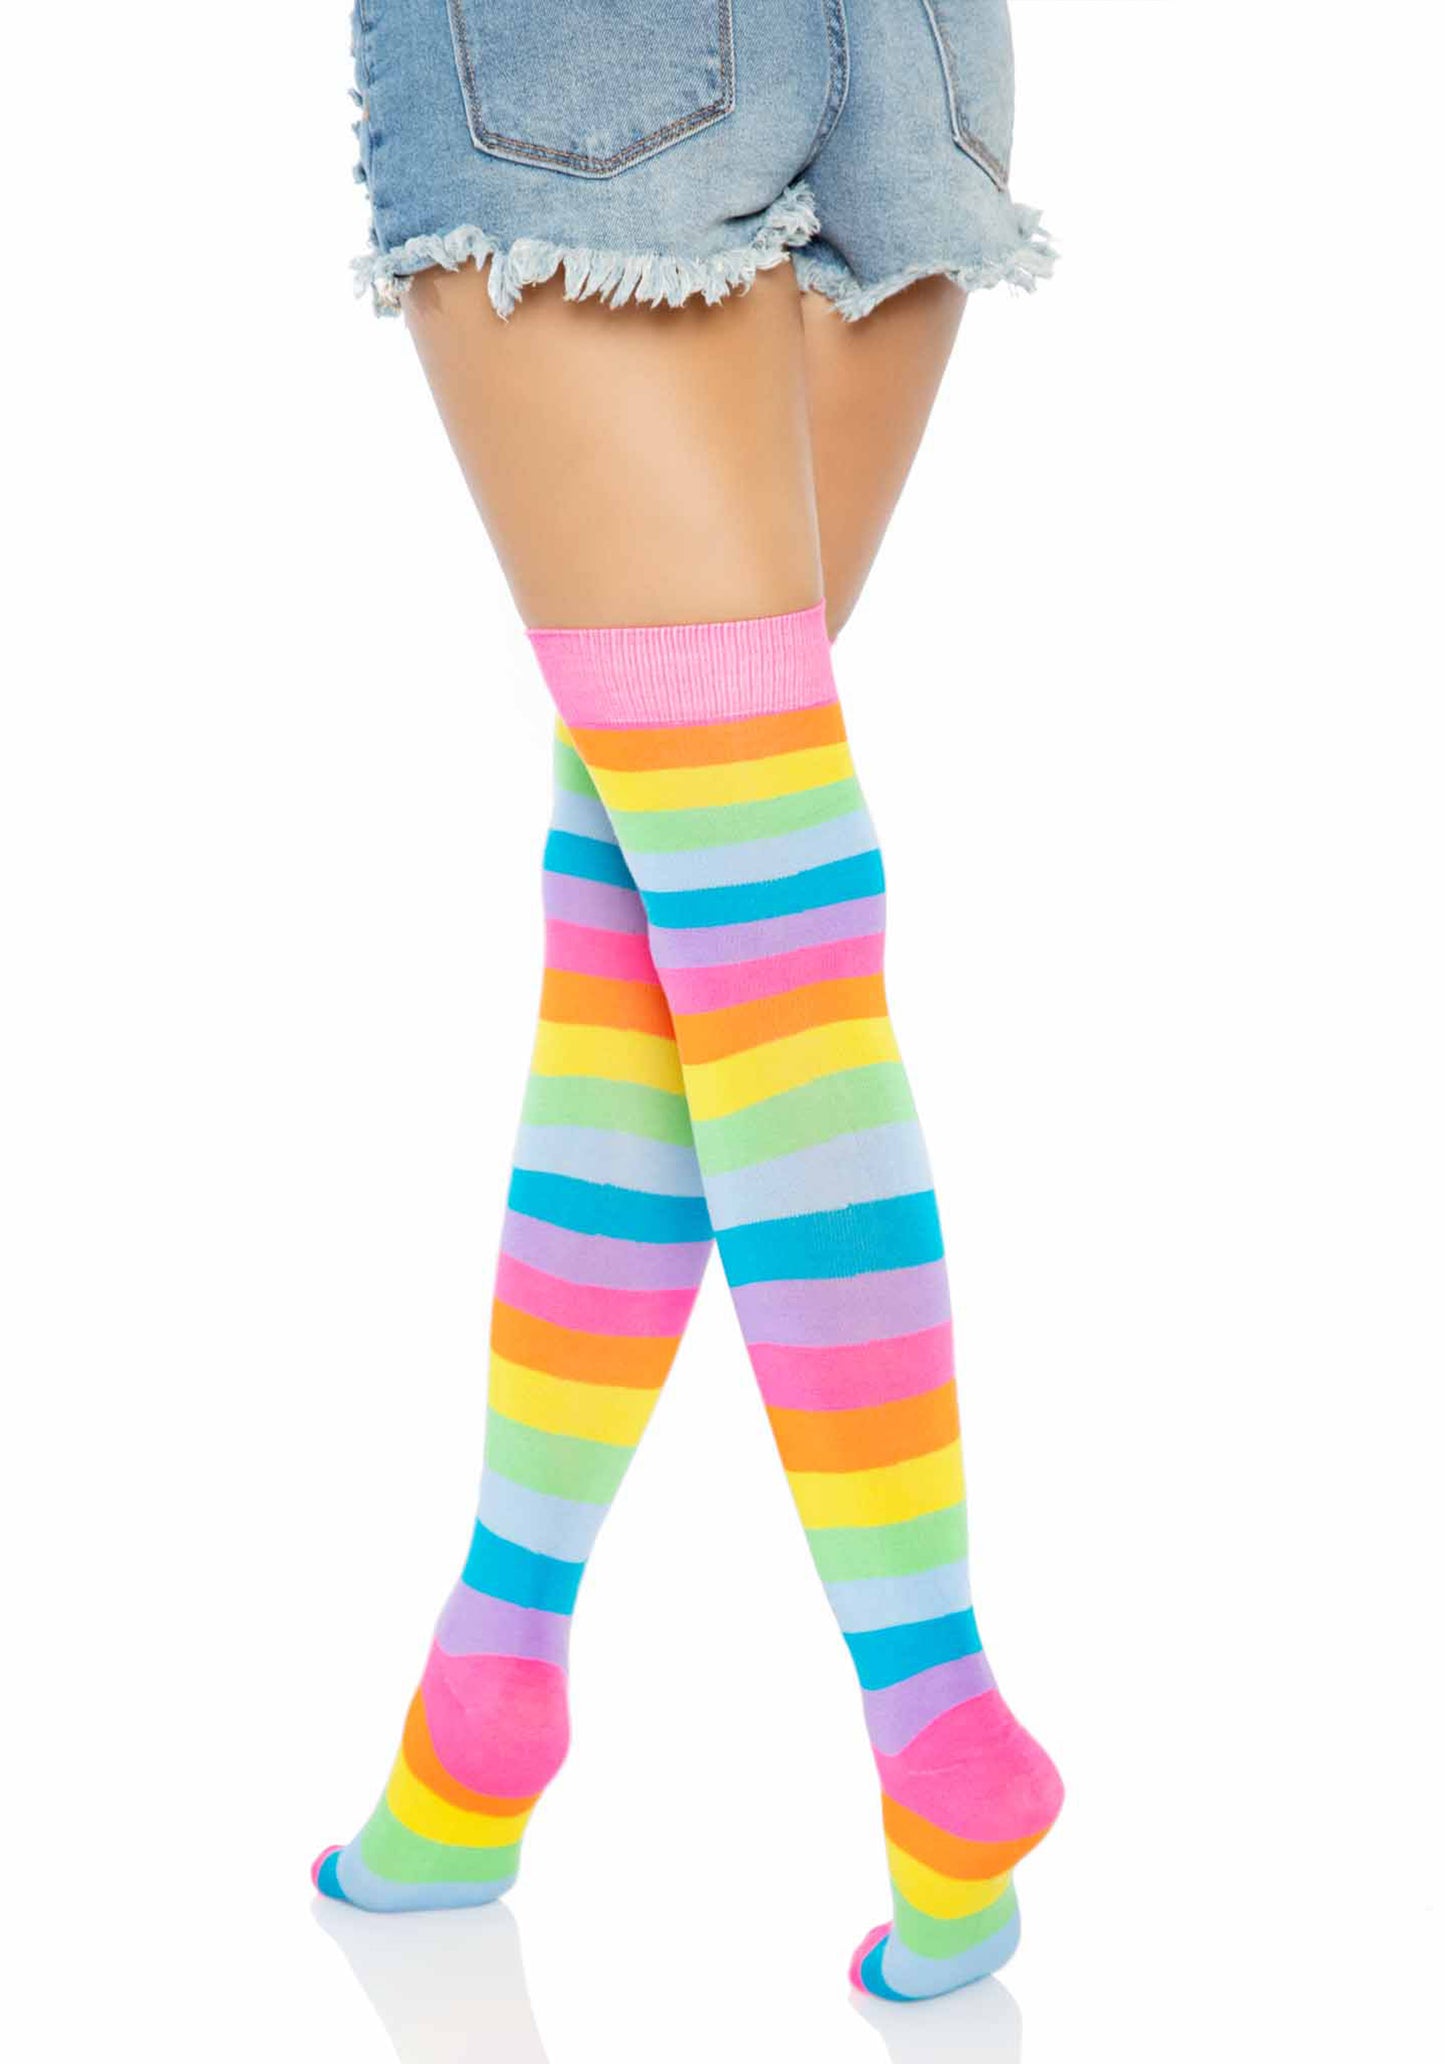 Leg Avenue 6600 Rainbow Over The Knee Socks - Multicoloured horizontal stripe thigh high socks with elasticated cuff.